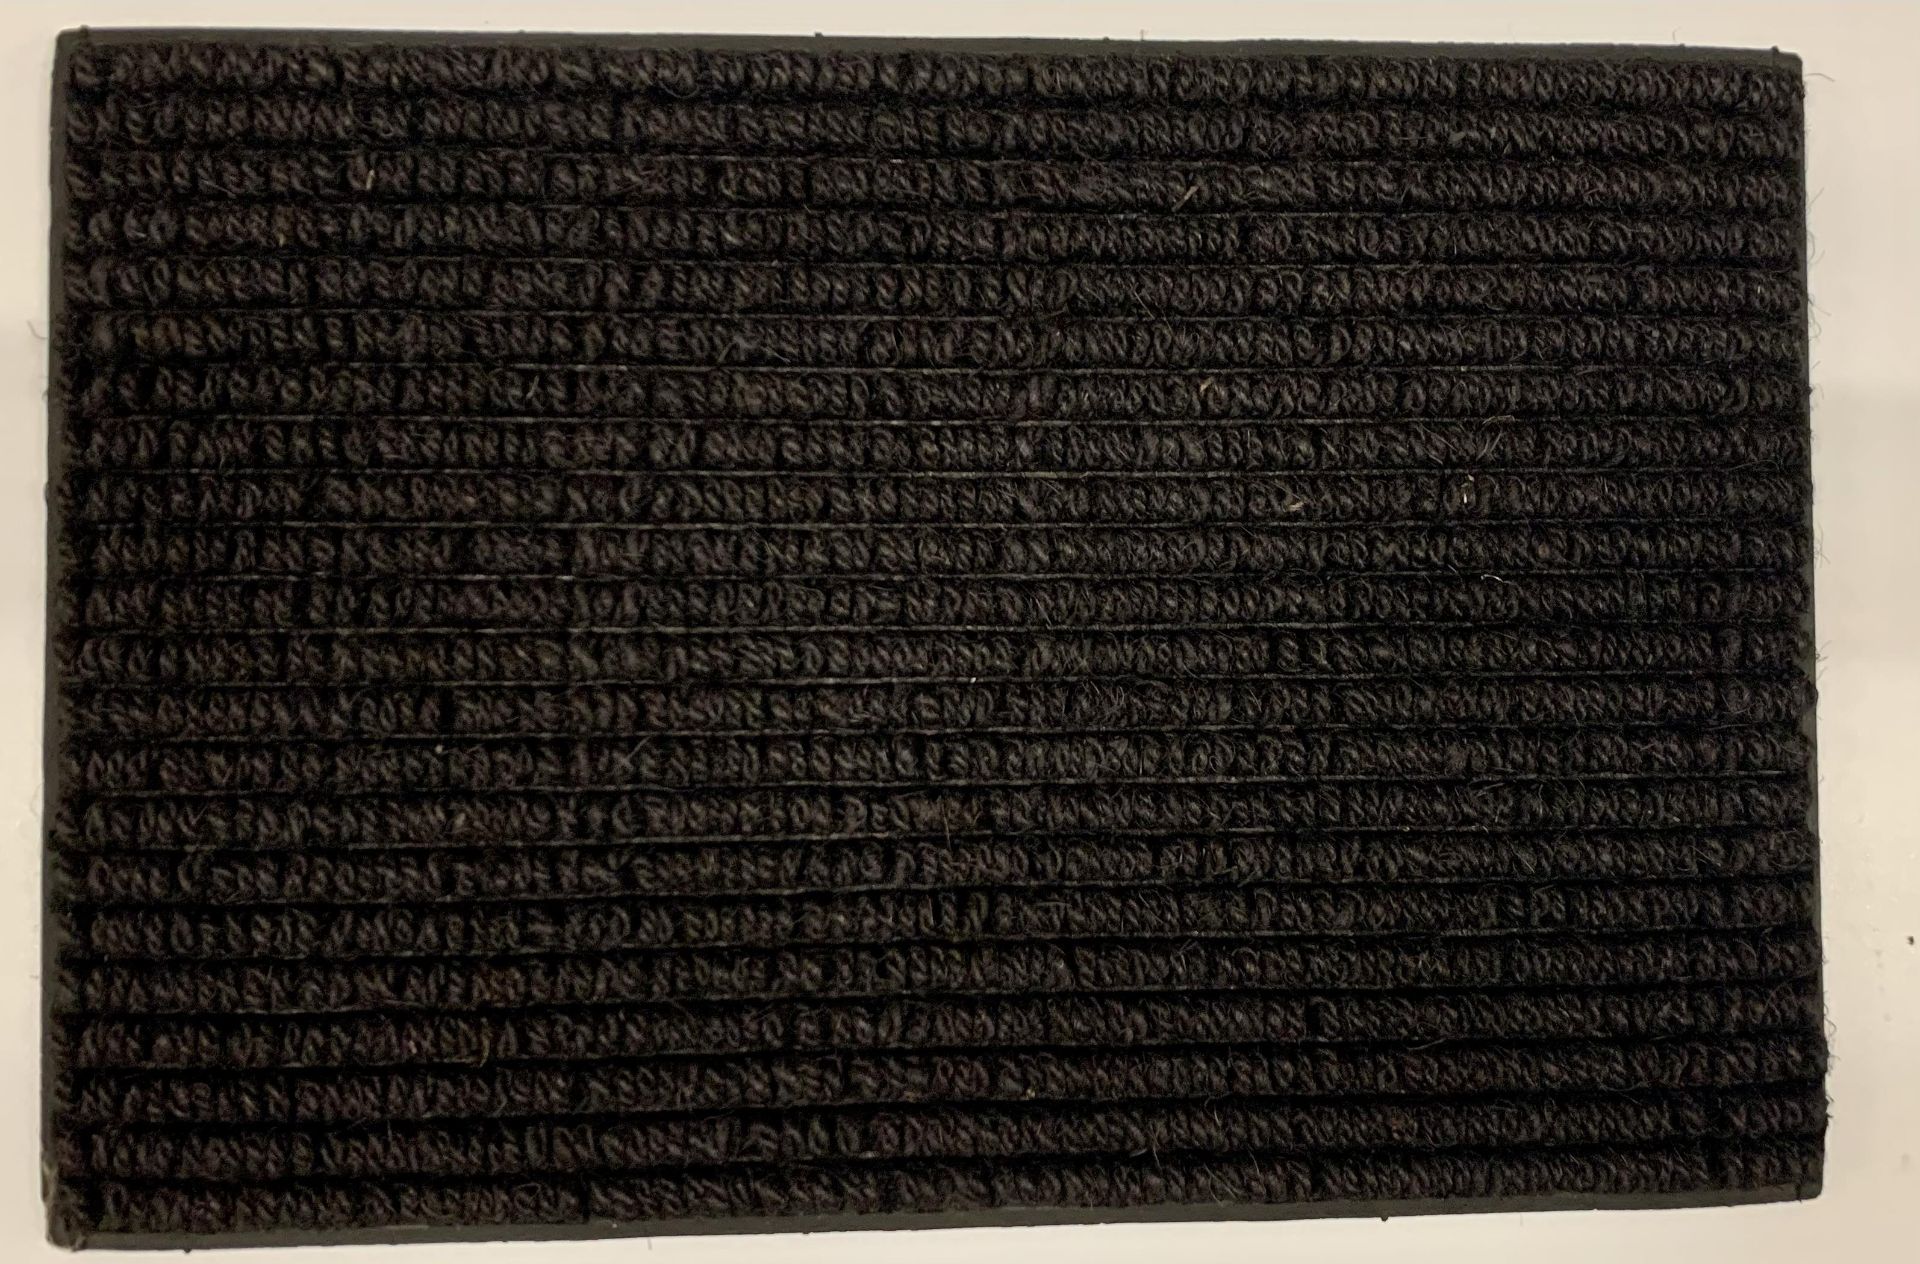 20 x black rubber backed woven tufted coir doormats - 60cm x 40cm